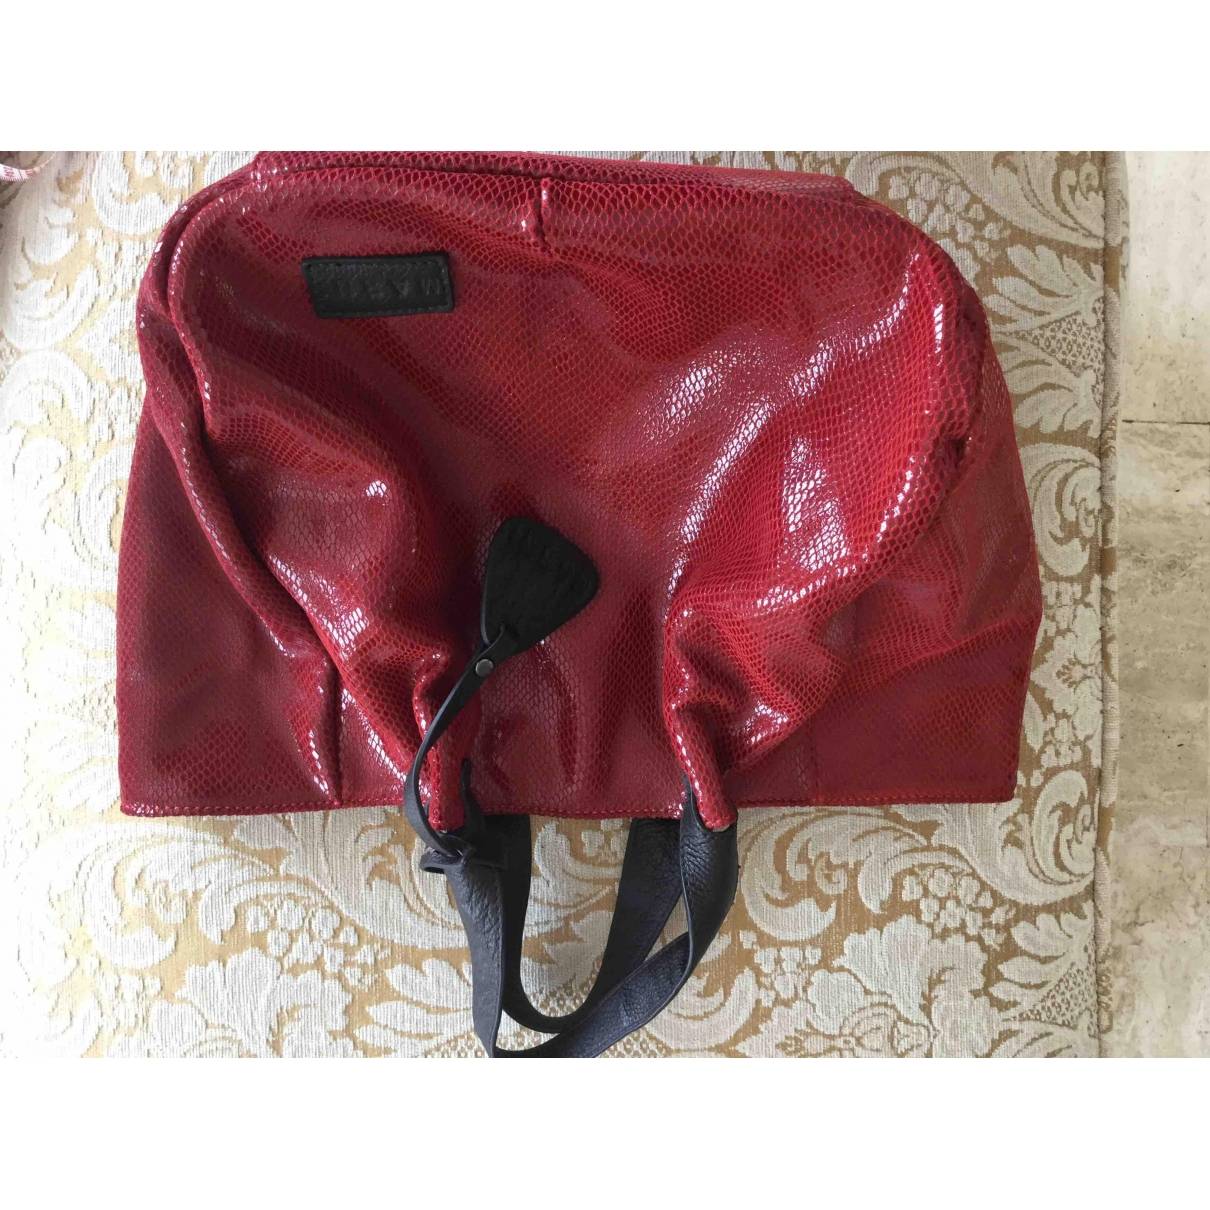 Patent leather handbag Marni Burgundy in Patent leather - 7580558